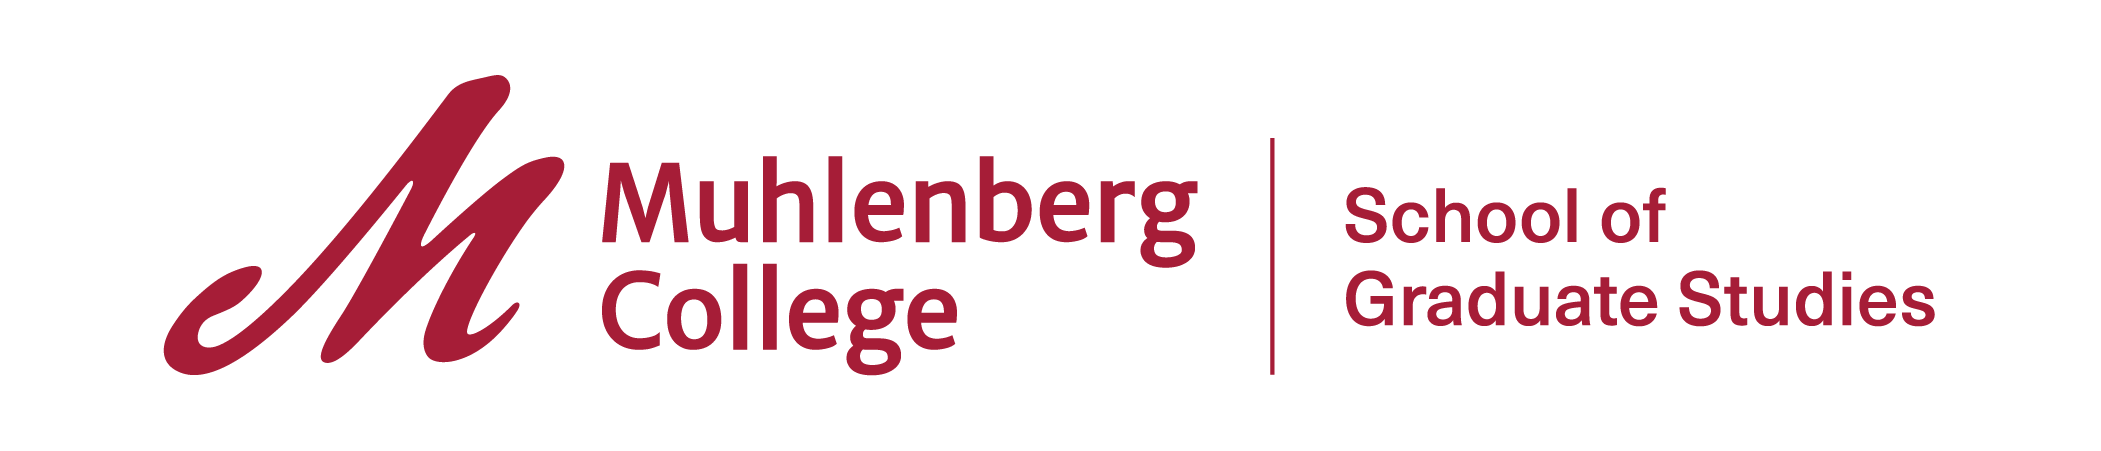 Graduate studies logo